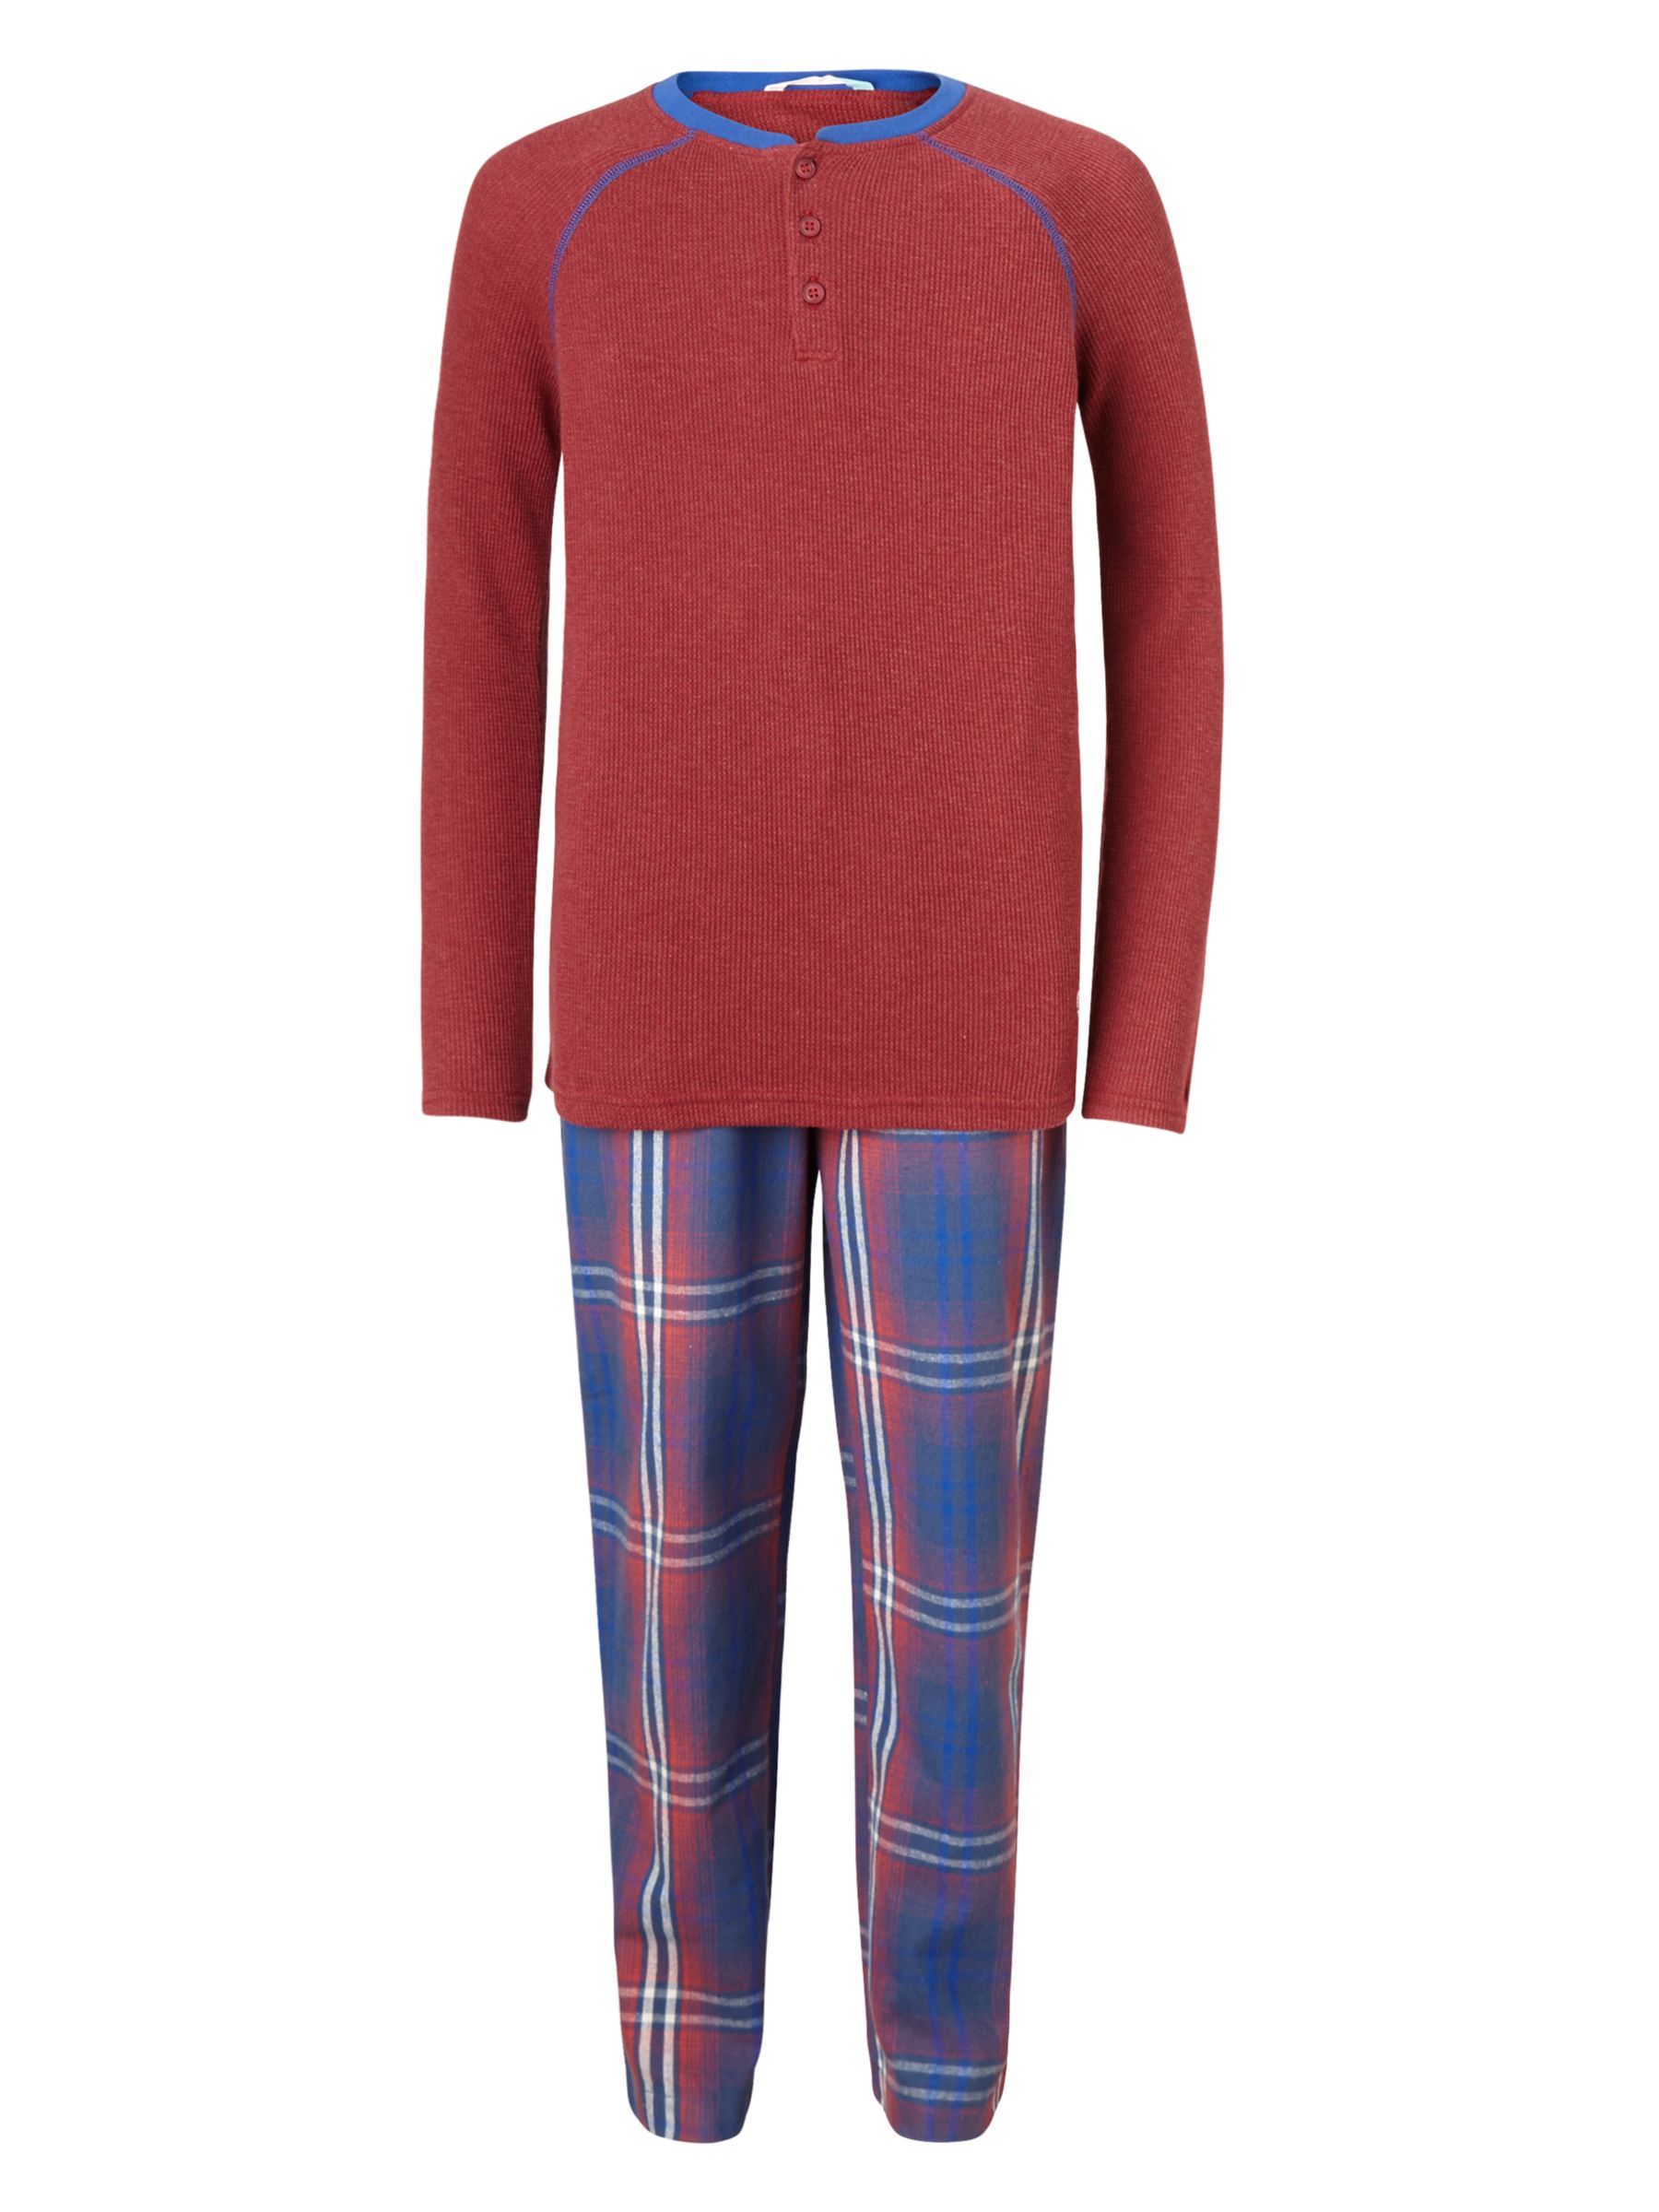 John Lewis & Partners Children's Check Print Pyjamas, Burgundy/Blue